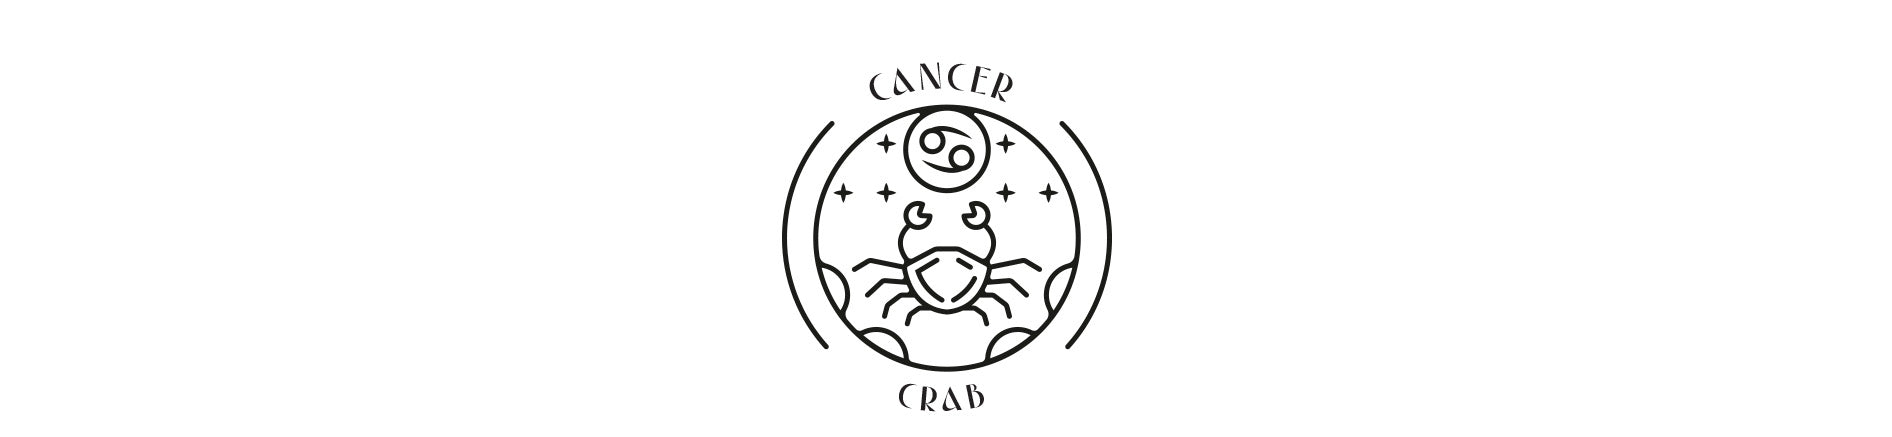 Broken English Jewelry - Zodiac Cancer